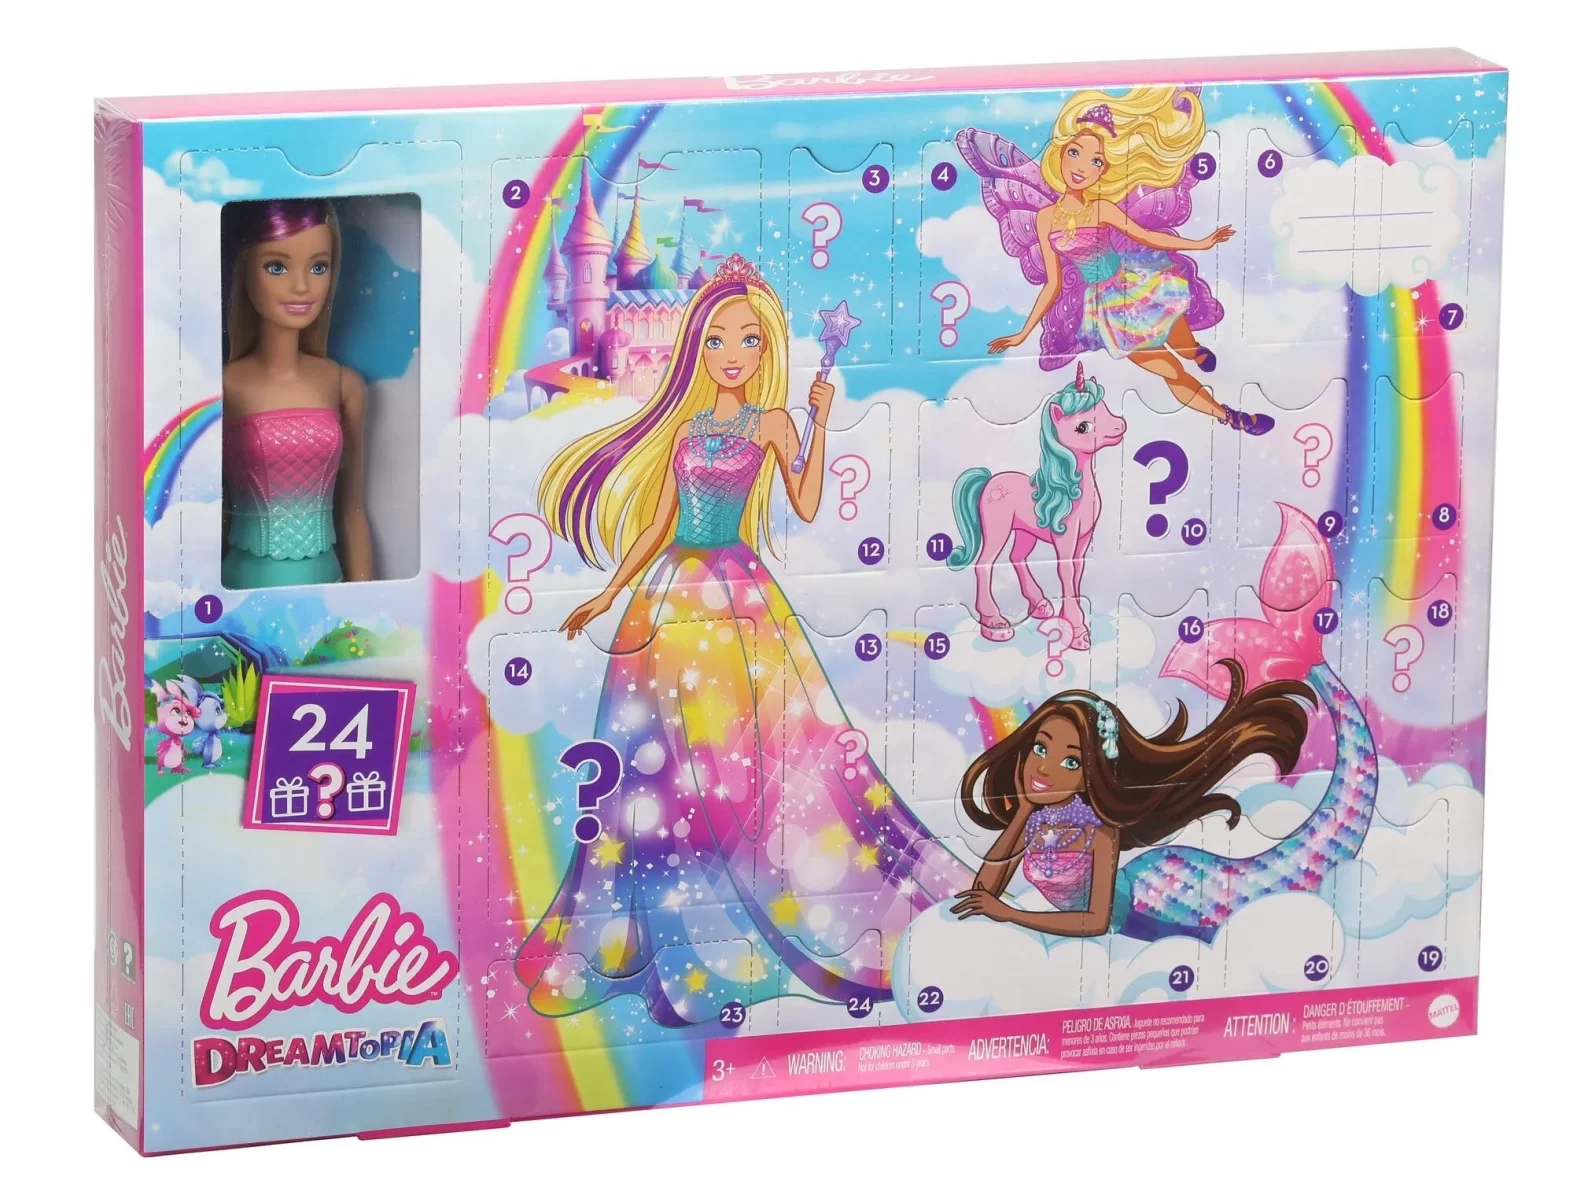 Barbie advento kalendorius Dreamtopia